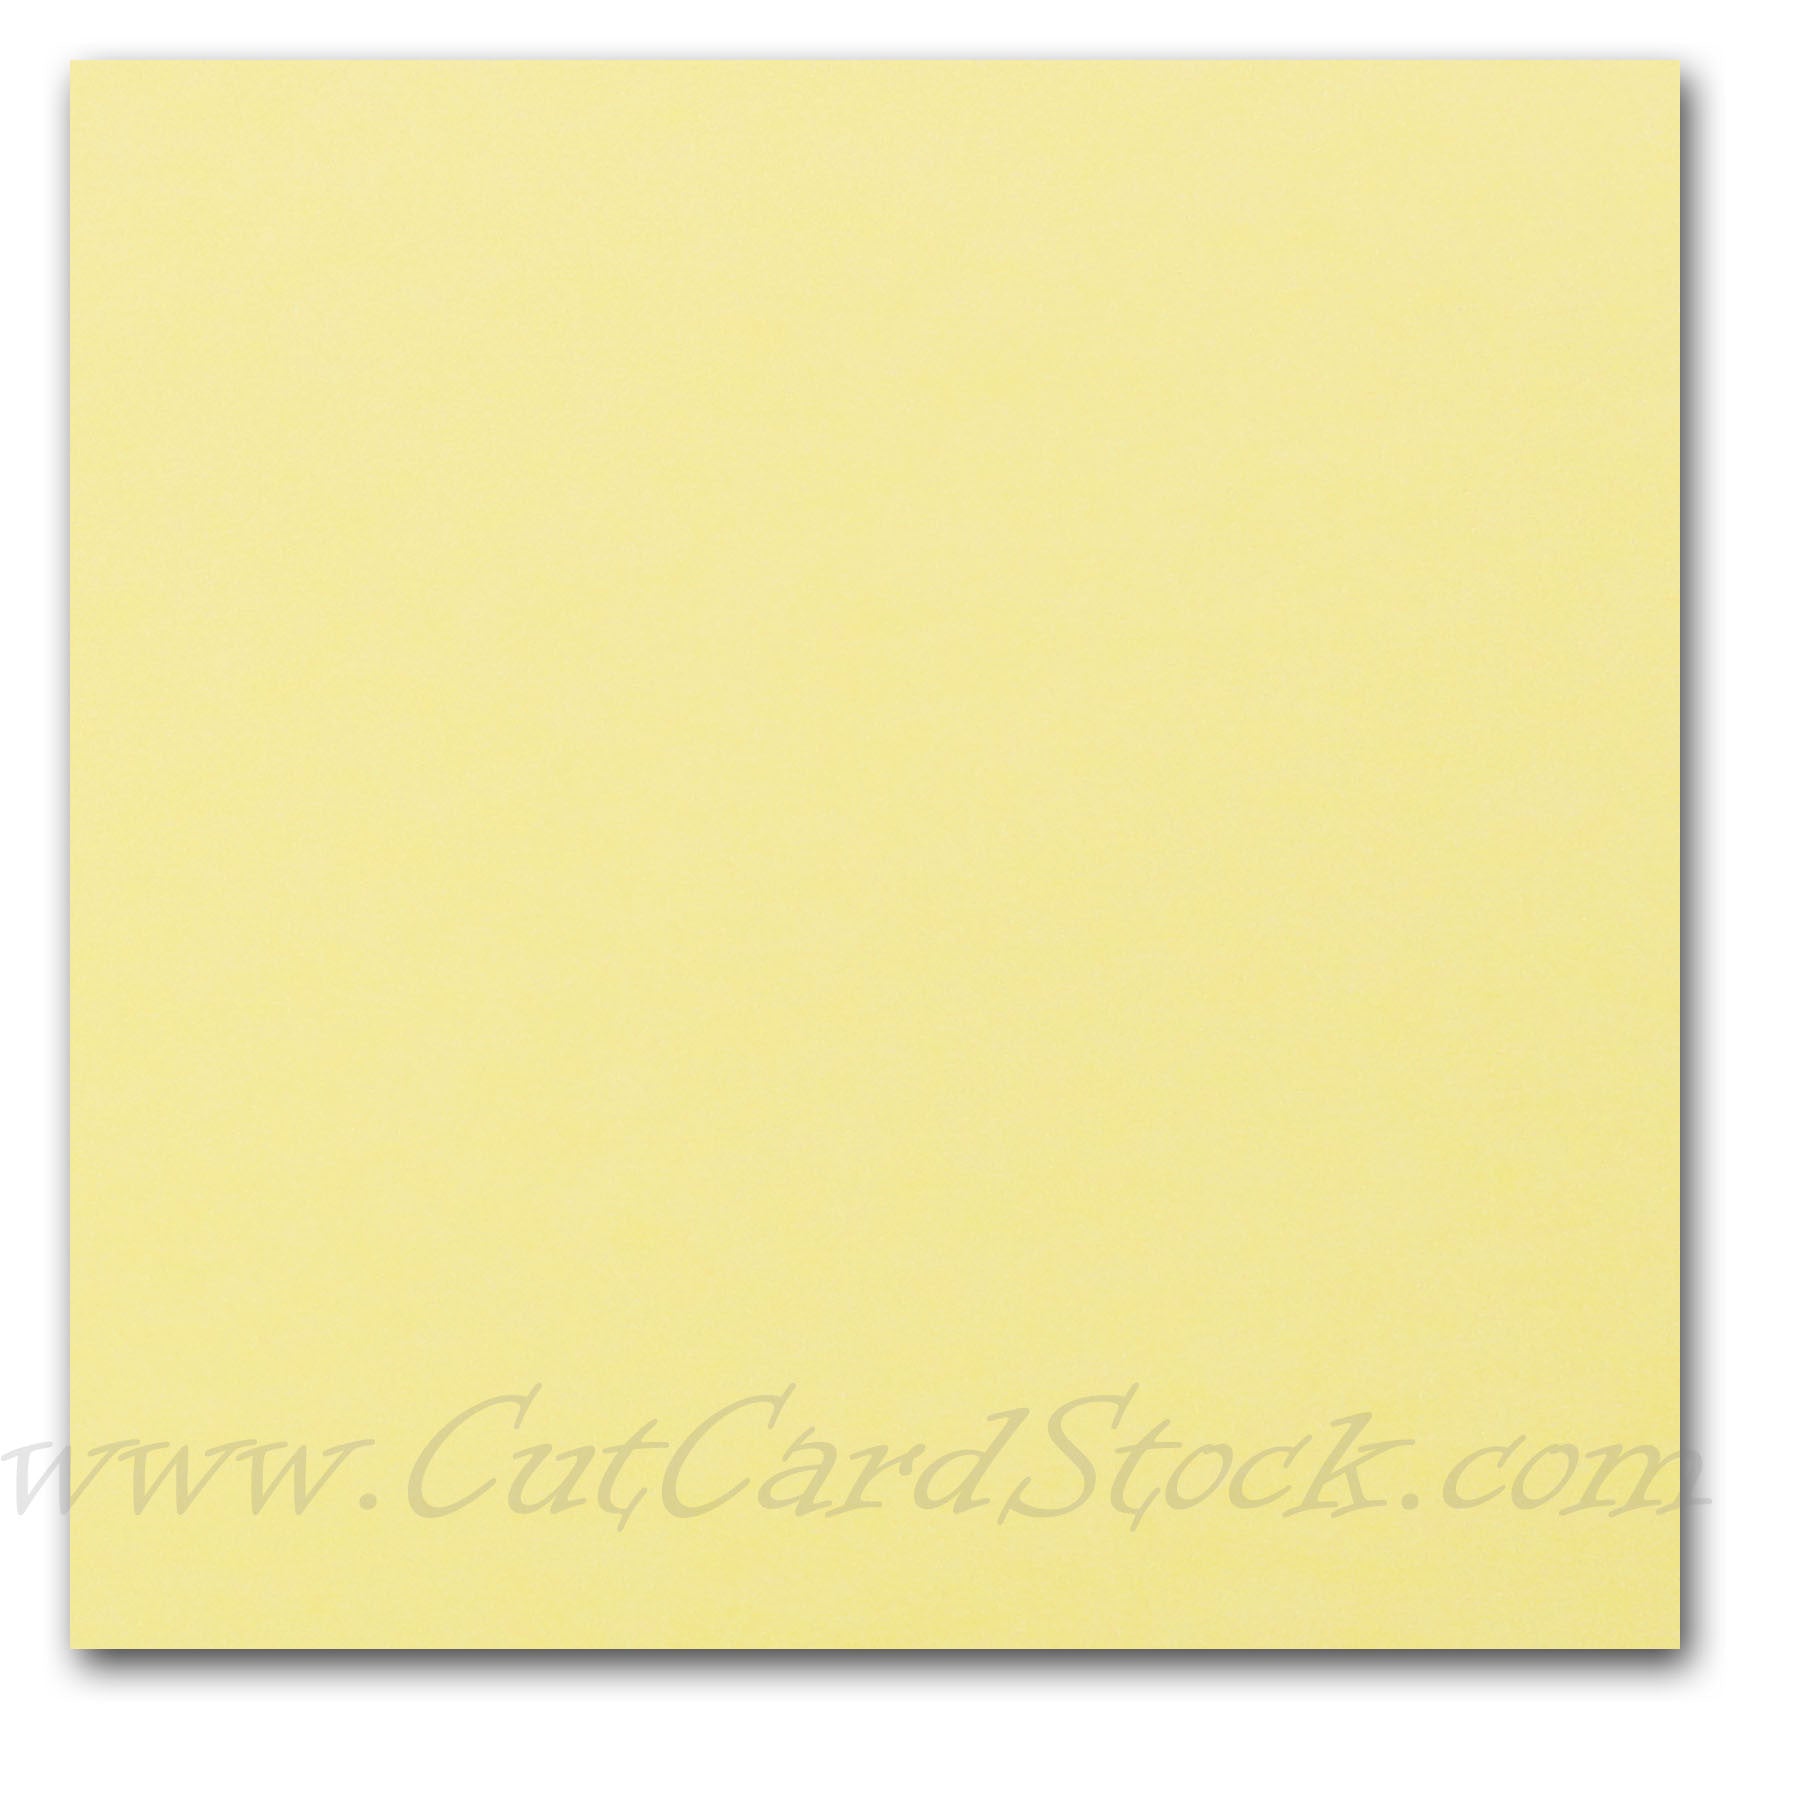 Springhill Digital Index White Card Stock - SGH015110 